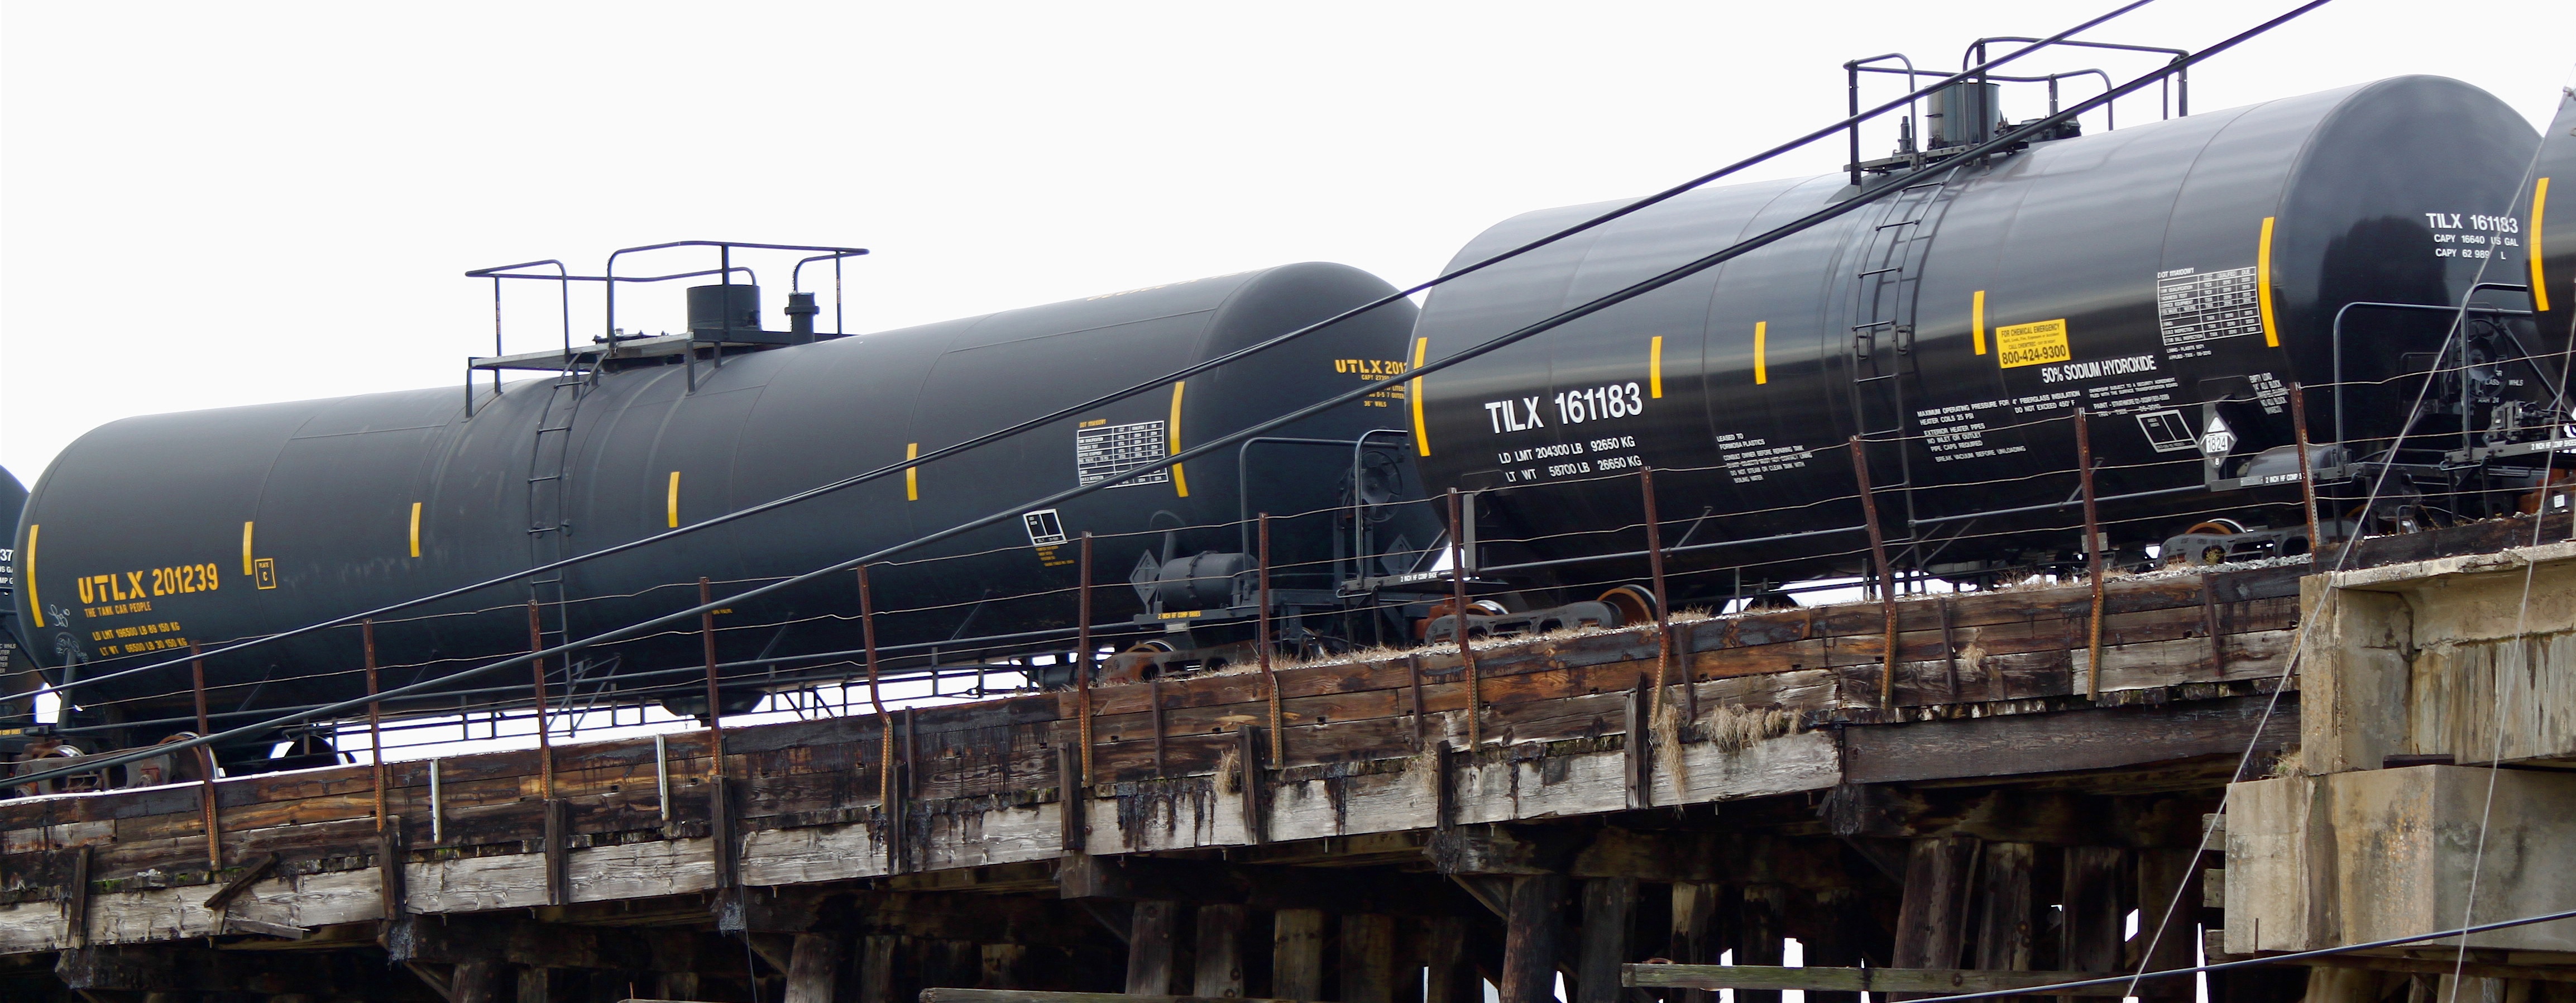 Swiss based Trafigura to halt oil trade with Venezuela amid US sanctions: Source